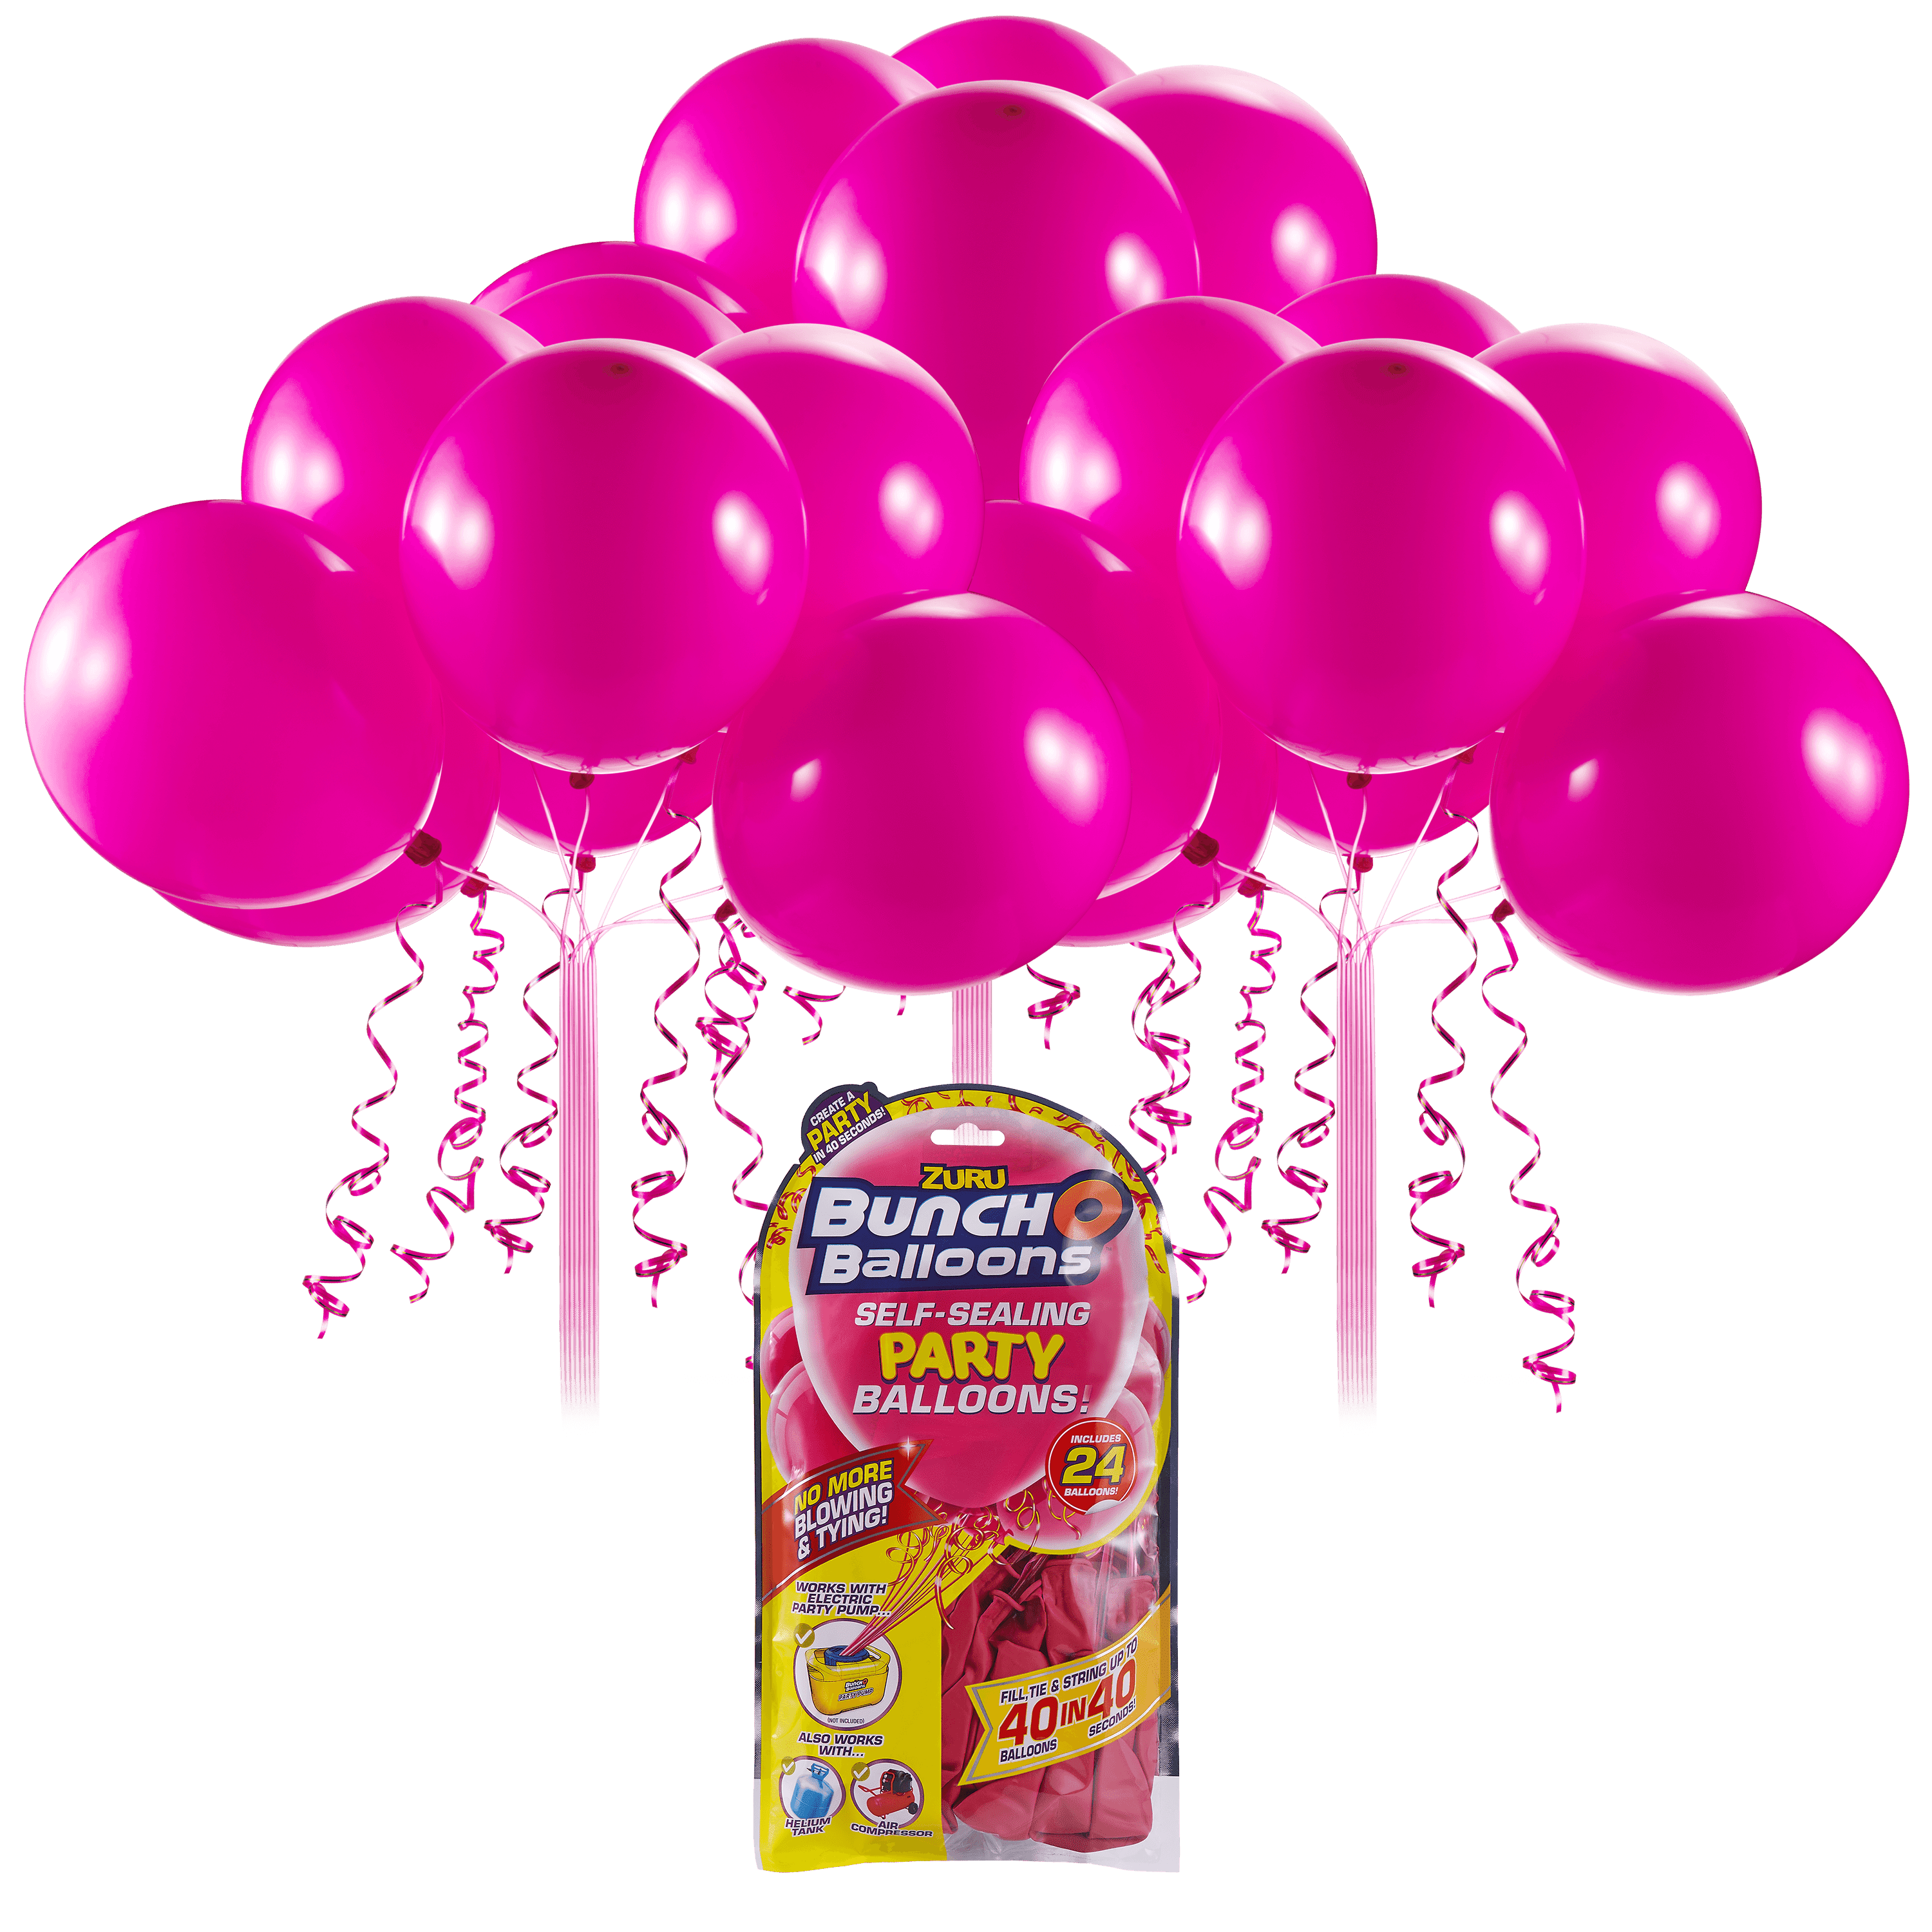 Knuppel Telemacos morfine Bunch O Balloons